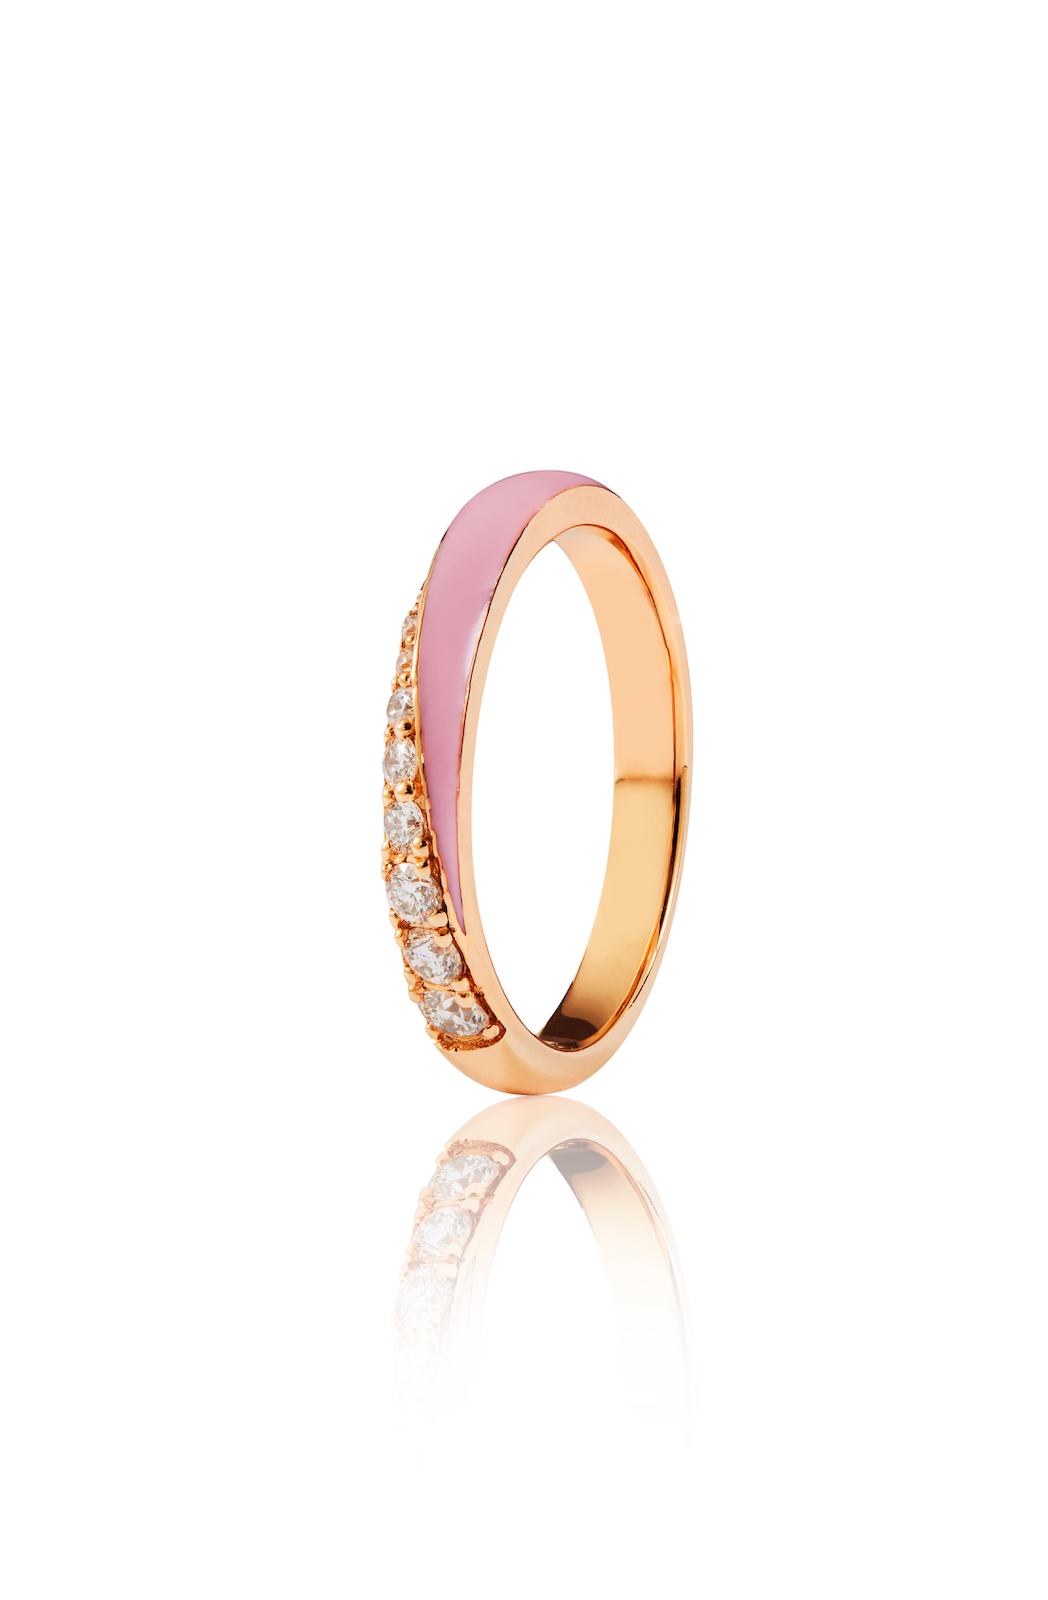 Diamond and Pink Enamel Ring